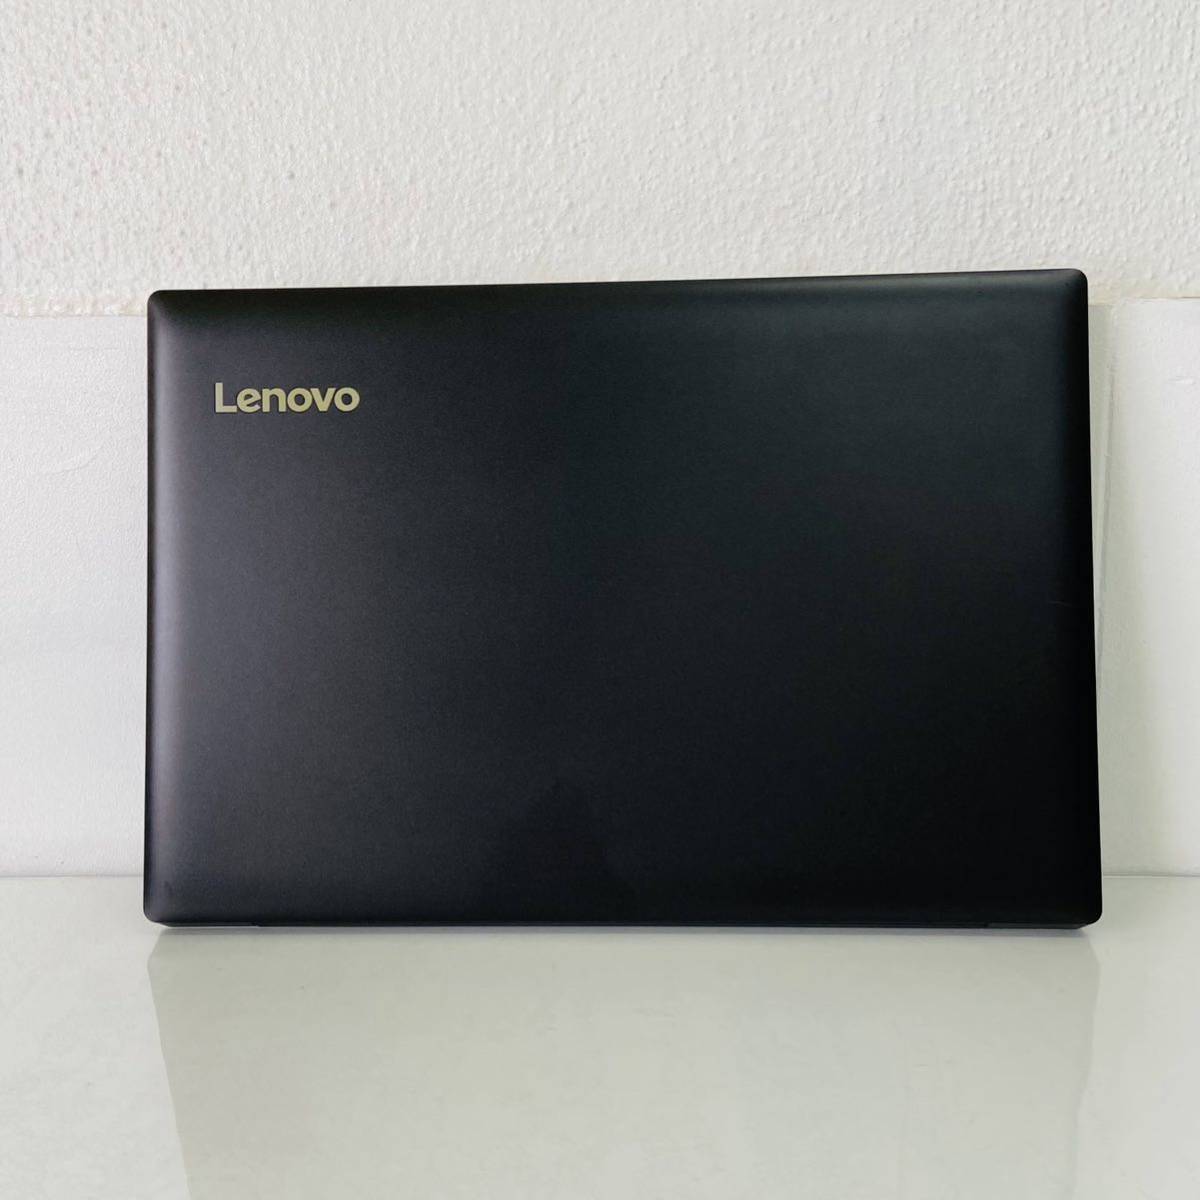 動作品 Lenovo ideapad 330-15IKB 81DE001LJP i3 7020U 4GB HDD 500GB